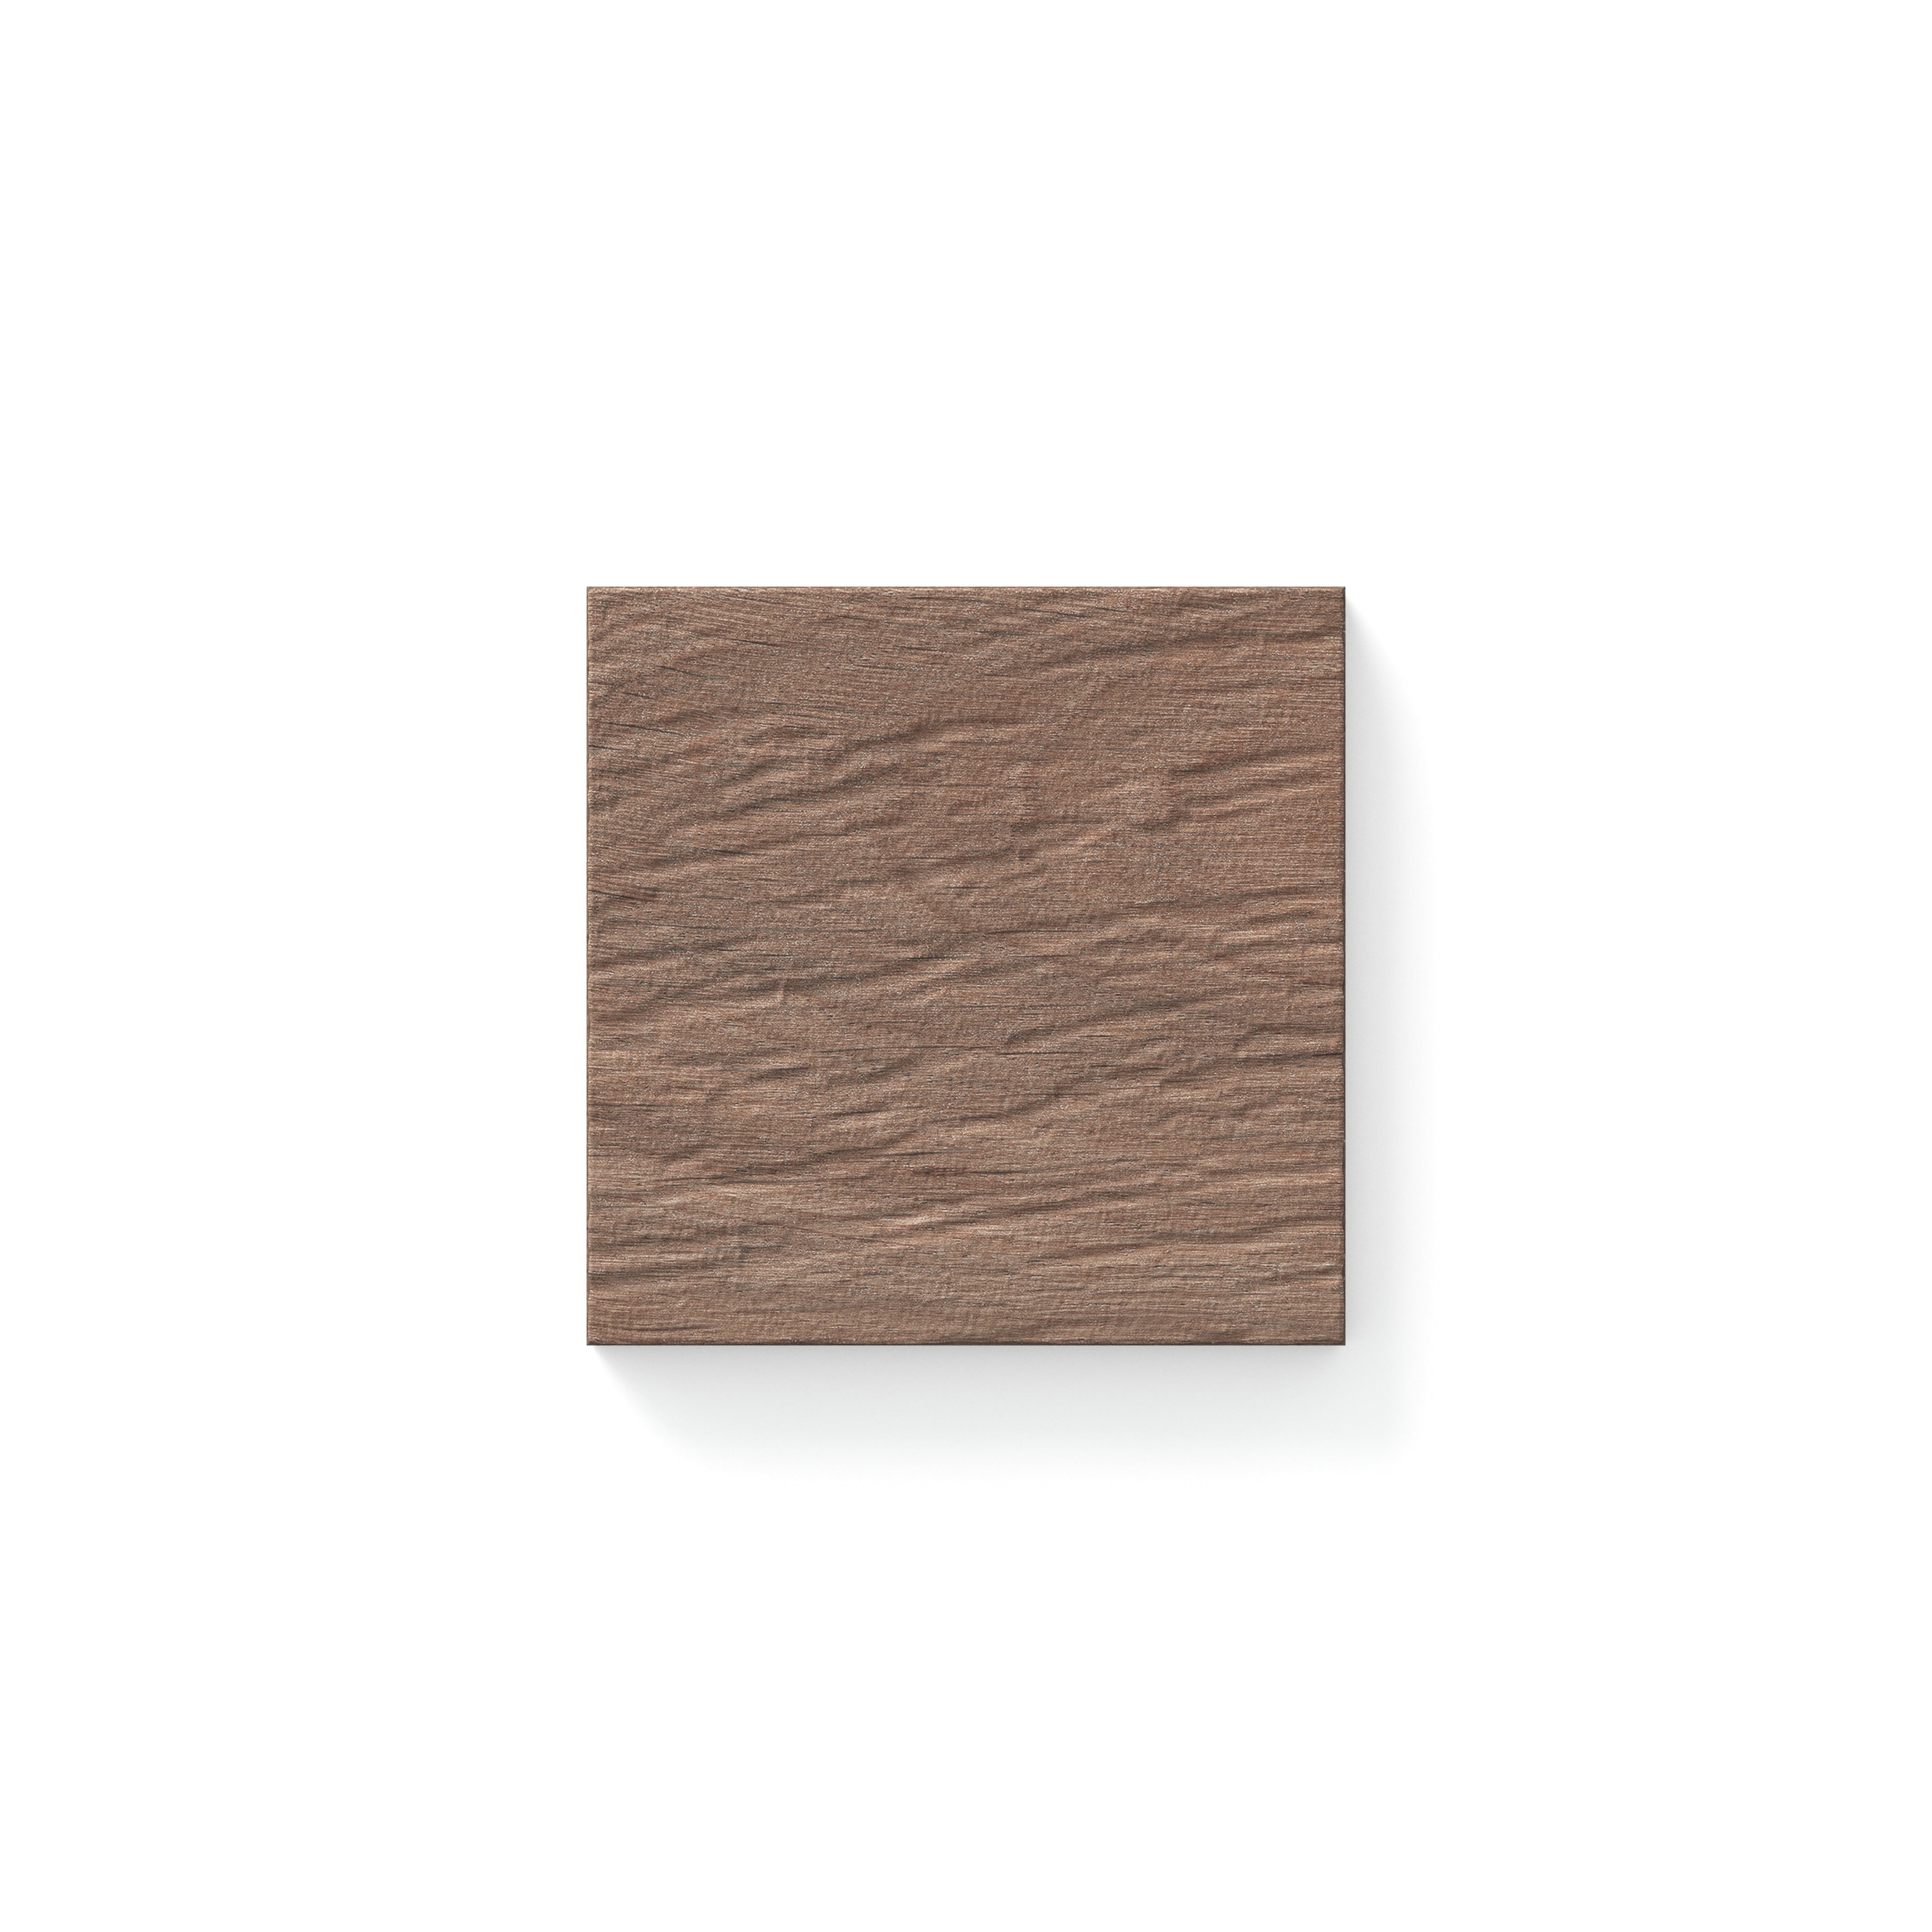 Preston Chestnut 4x4 Tile Sample